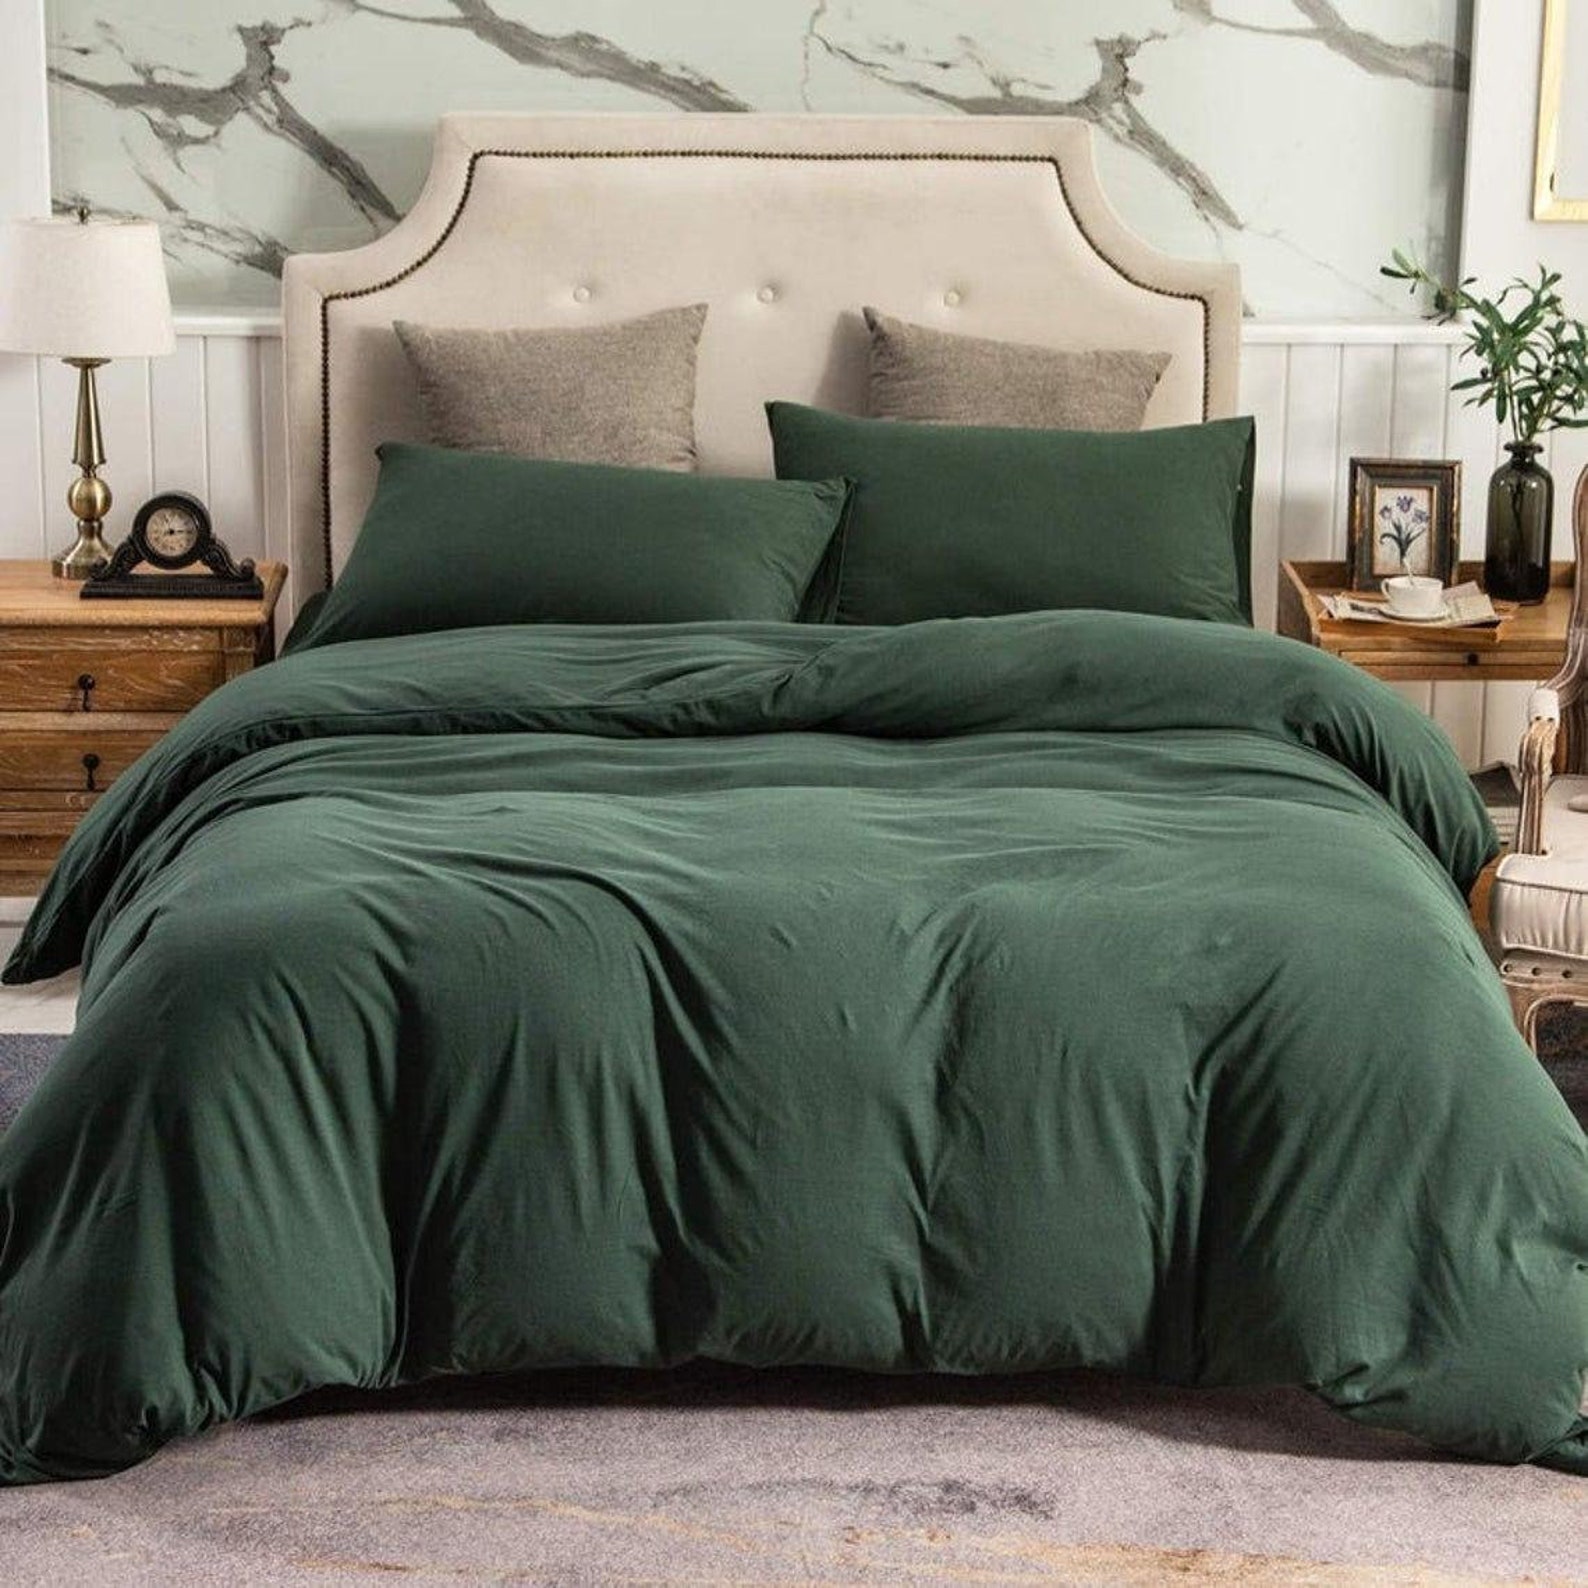 Champagne King Size Bedding Set : Comforter Pcs | Bodycrwasute